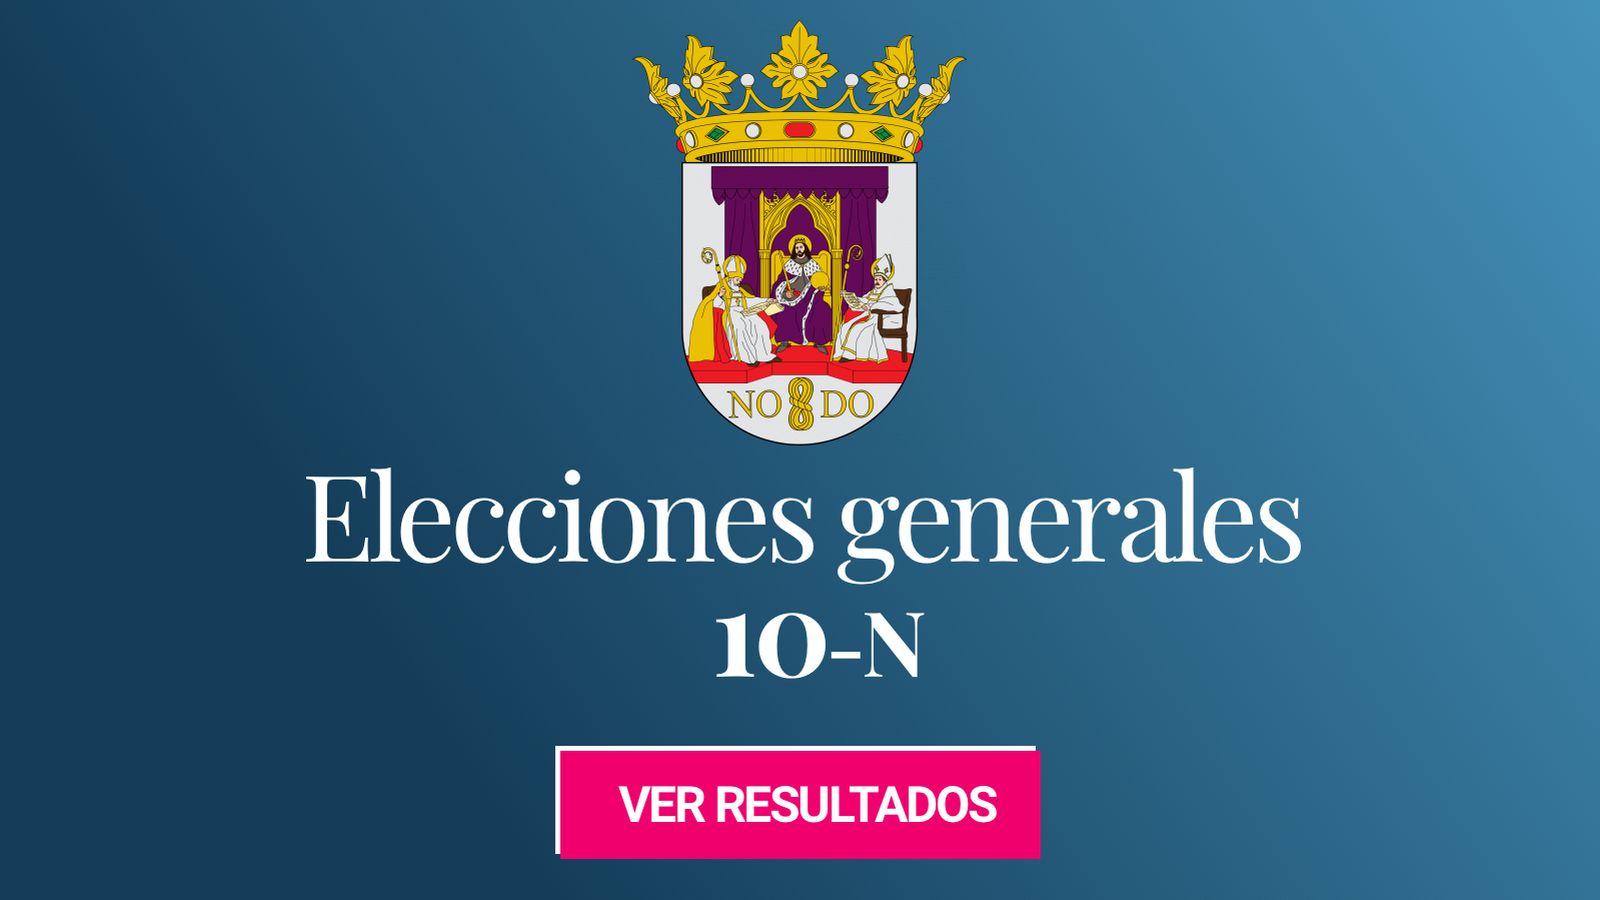 Foto: Elecciones generales 2019 en Sevilla. (C.C./EC)